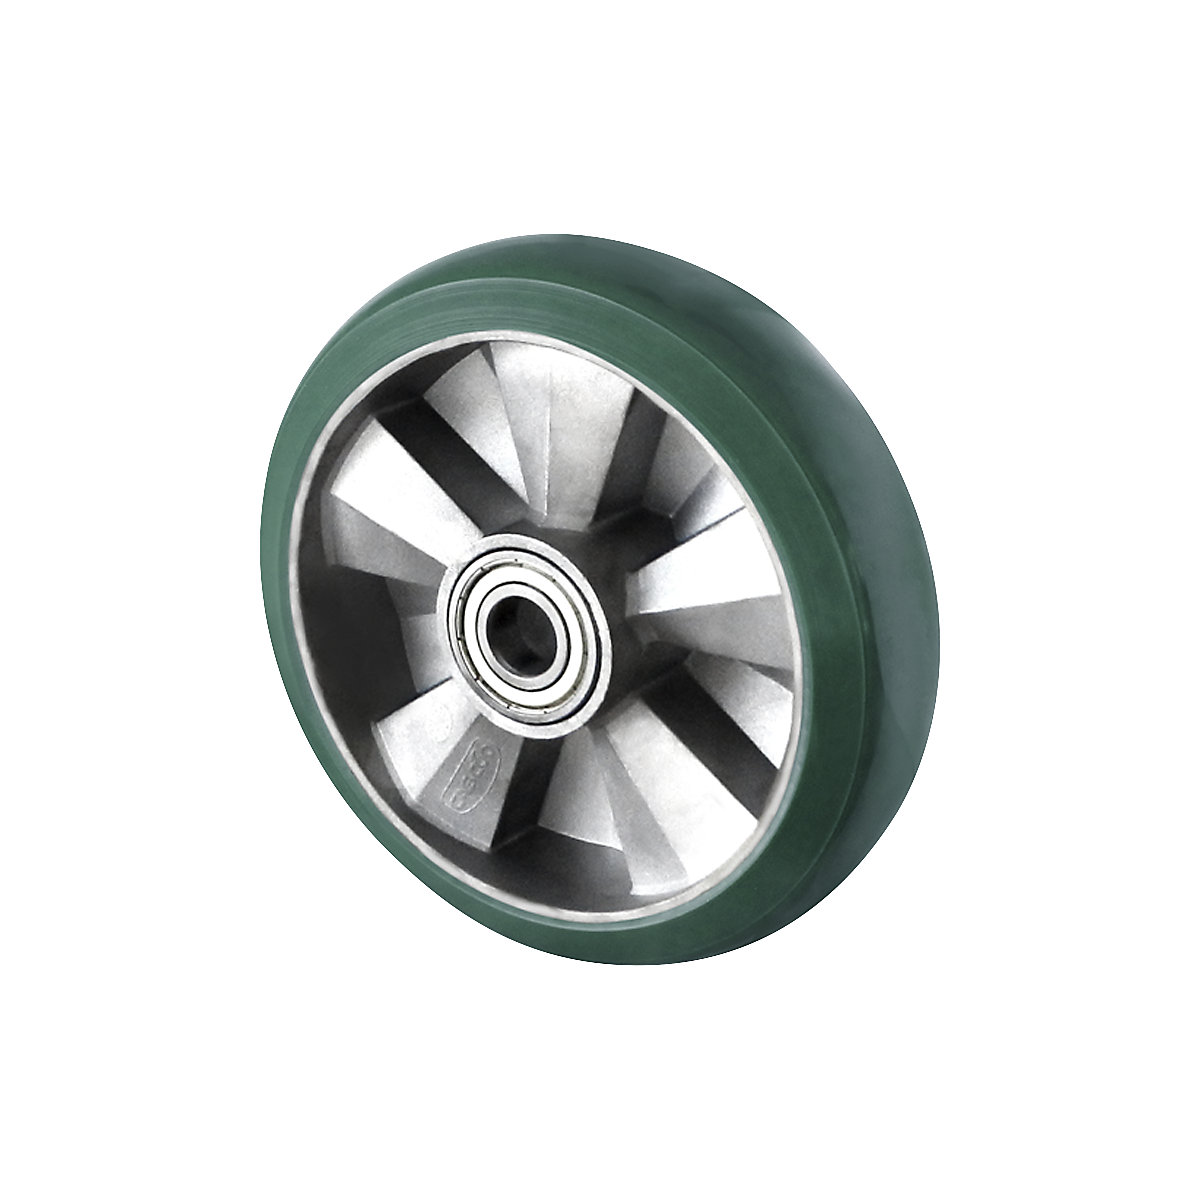 EUROKRAFTbasic – PU elastic wheel, green, double ball bearing, 2+ items, wheel Ø x width 200 x 50 mm